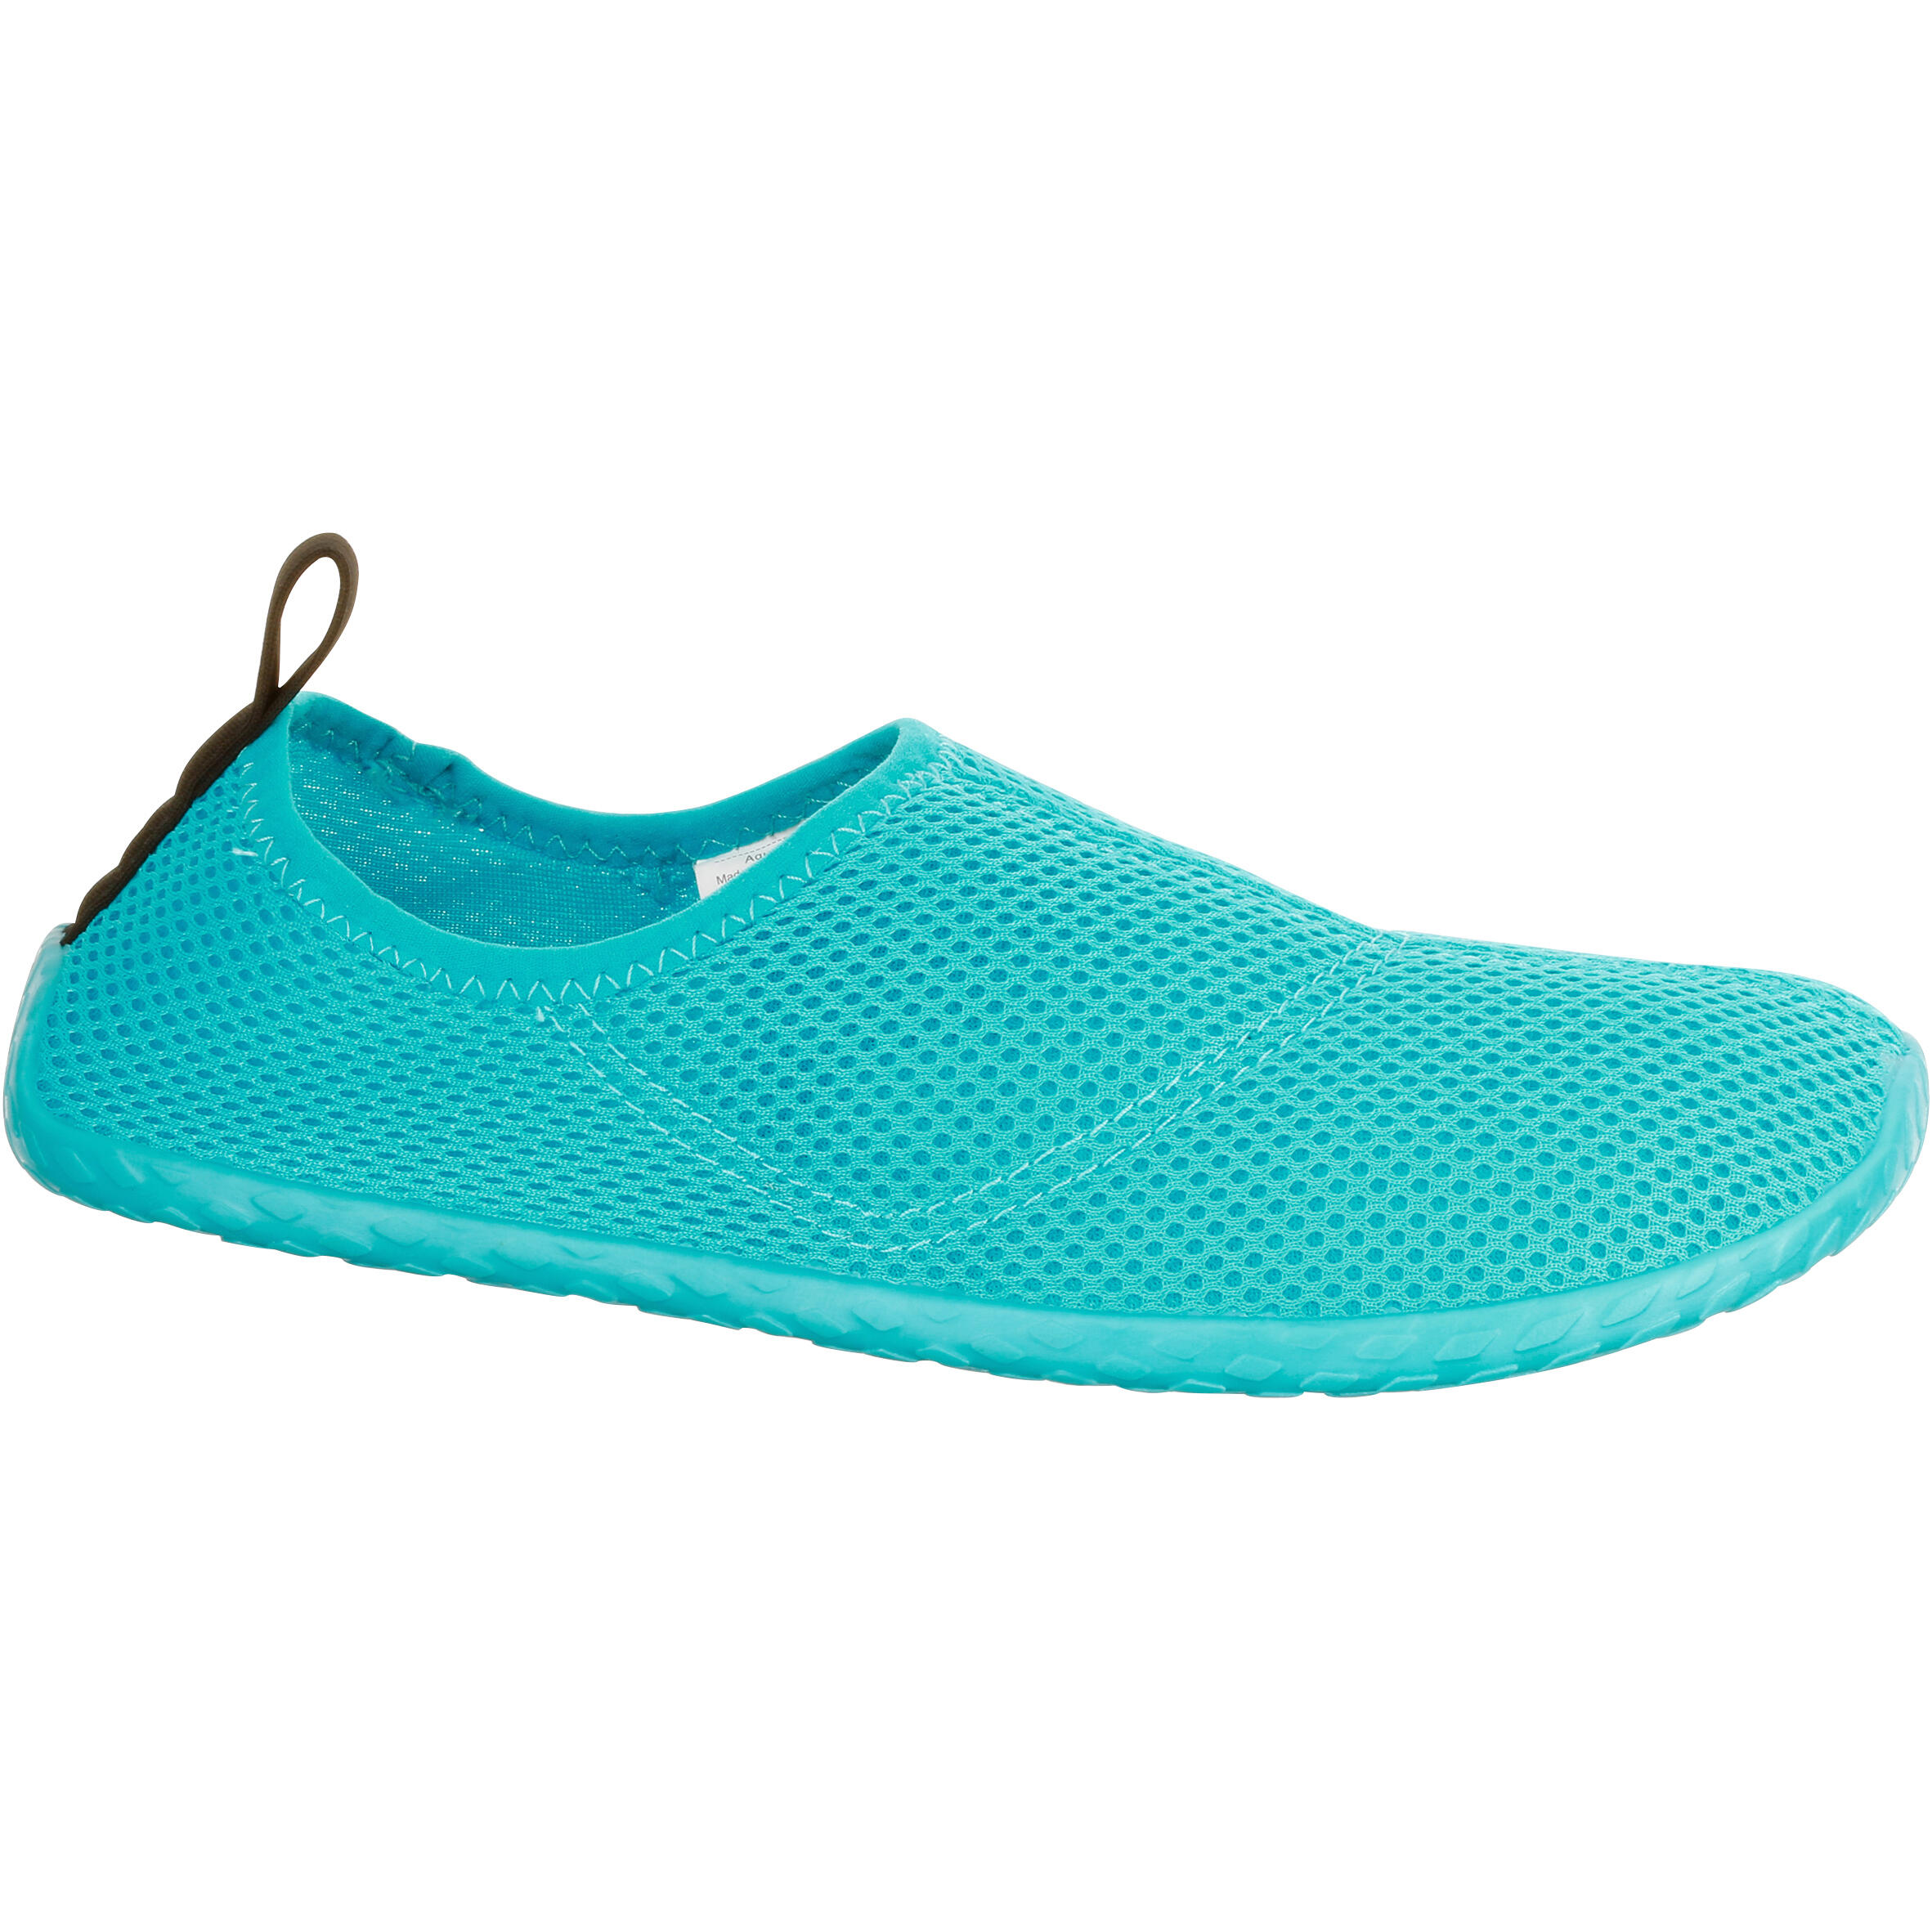 decathlon swimming shoes